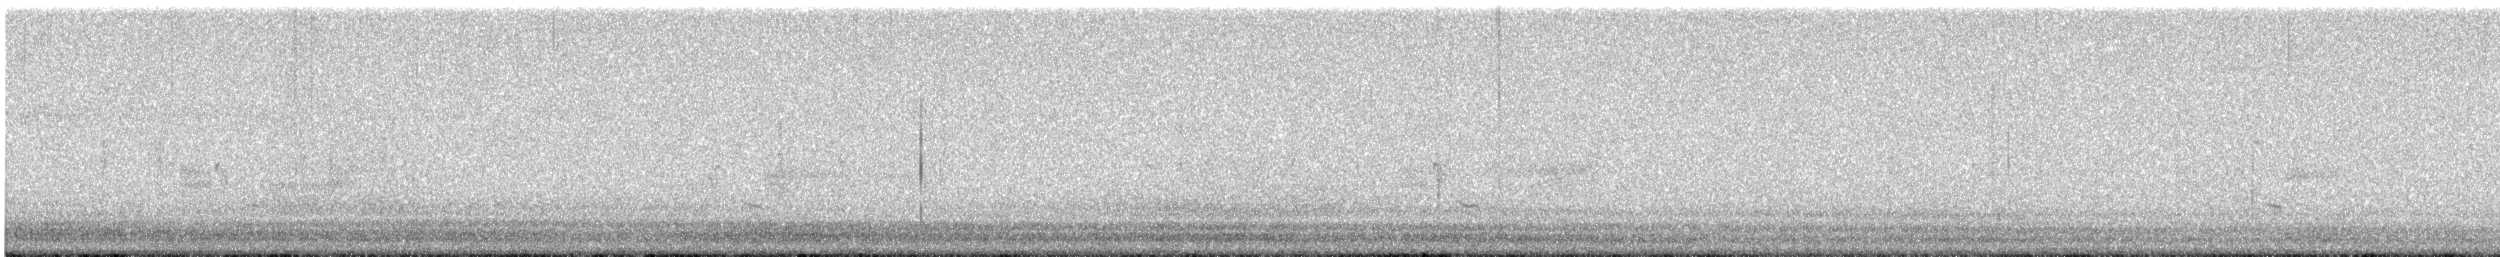 Приморская овсянка-барсучок [группа sennetti] - ML609164046